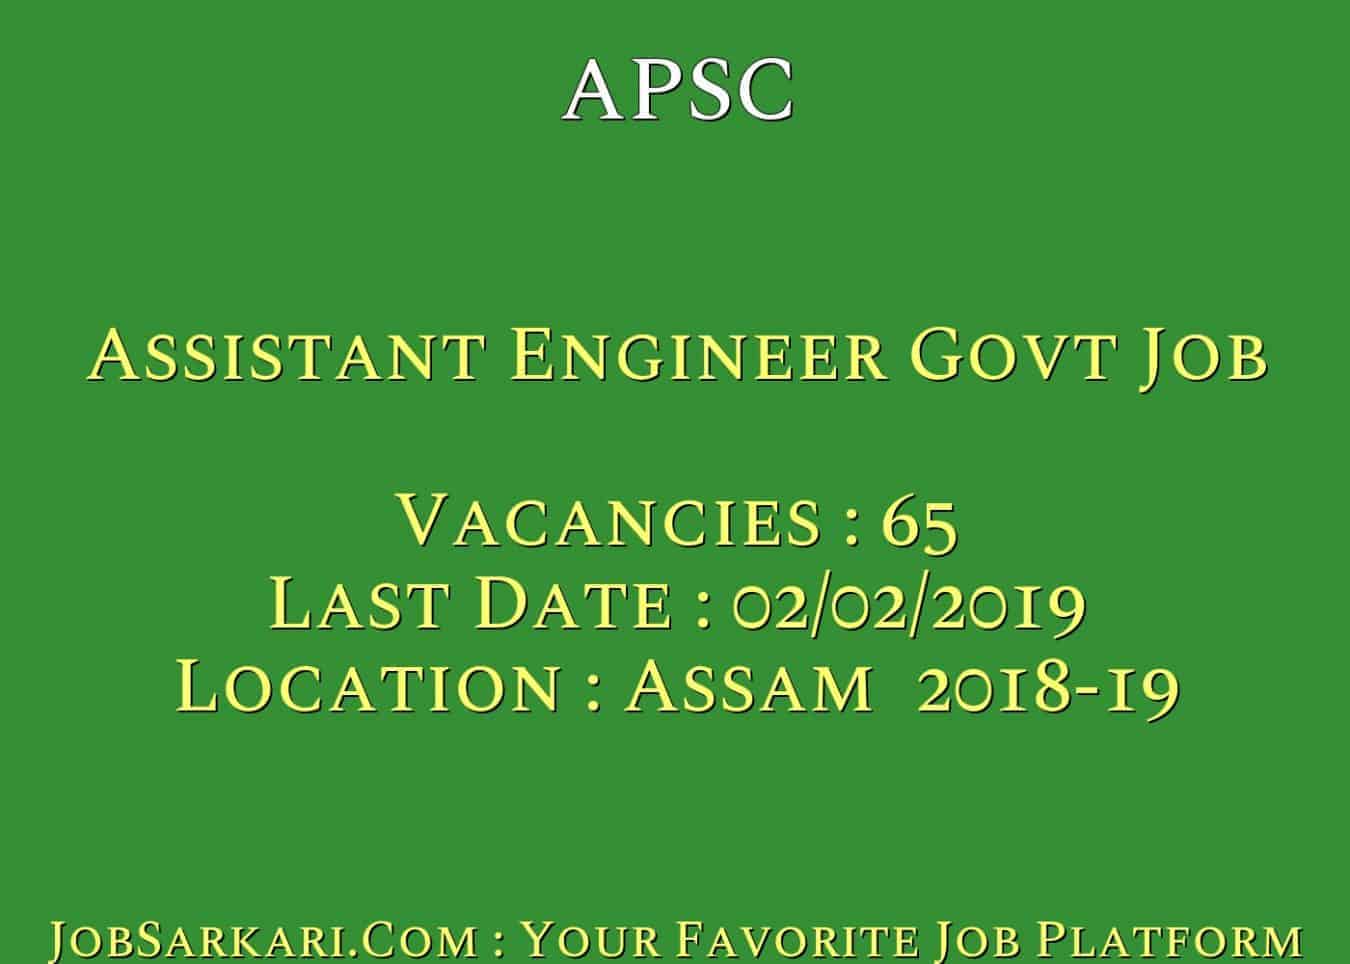 APSC Recruitment 2018 For Assistant Engineer Govt Job